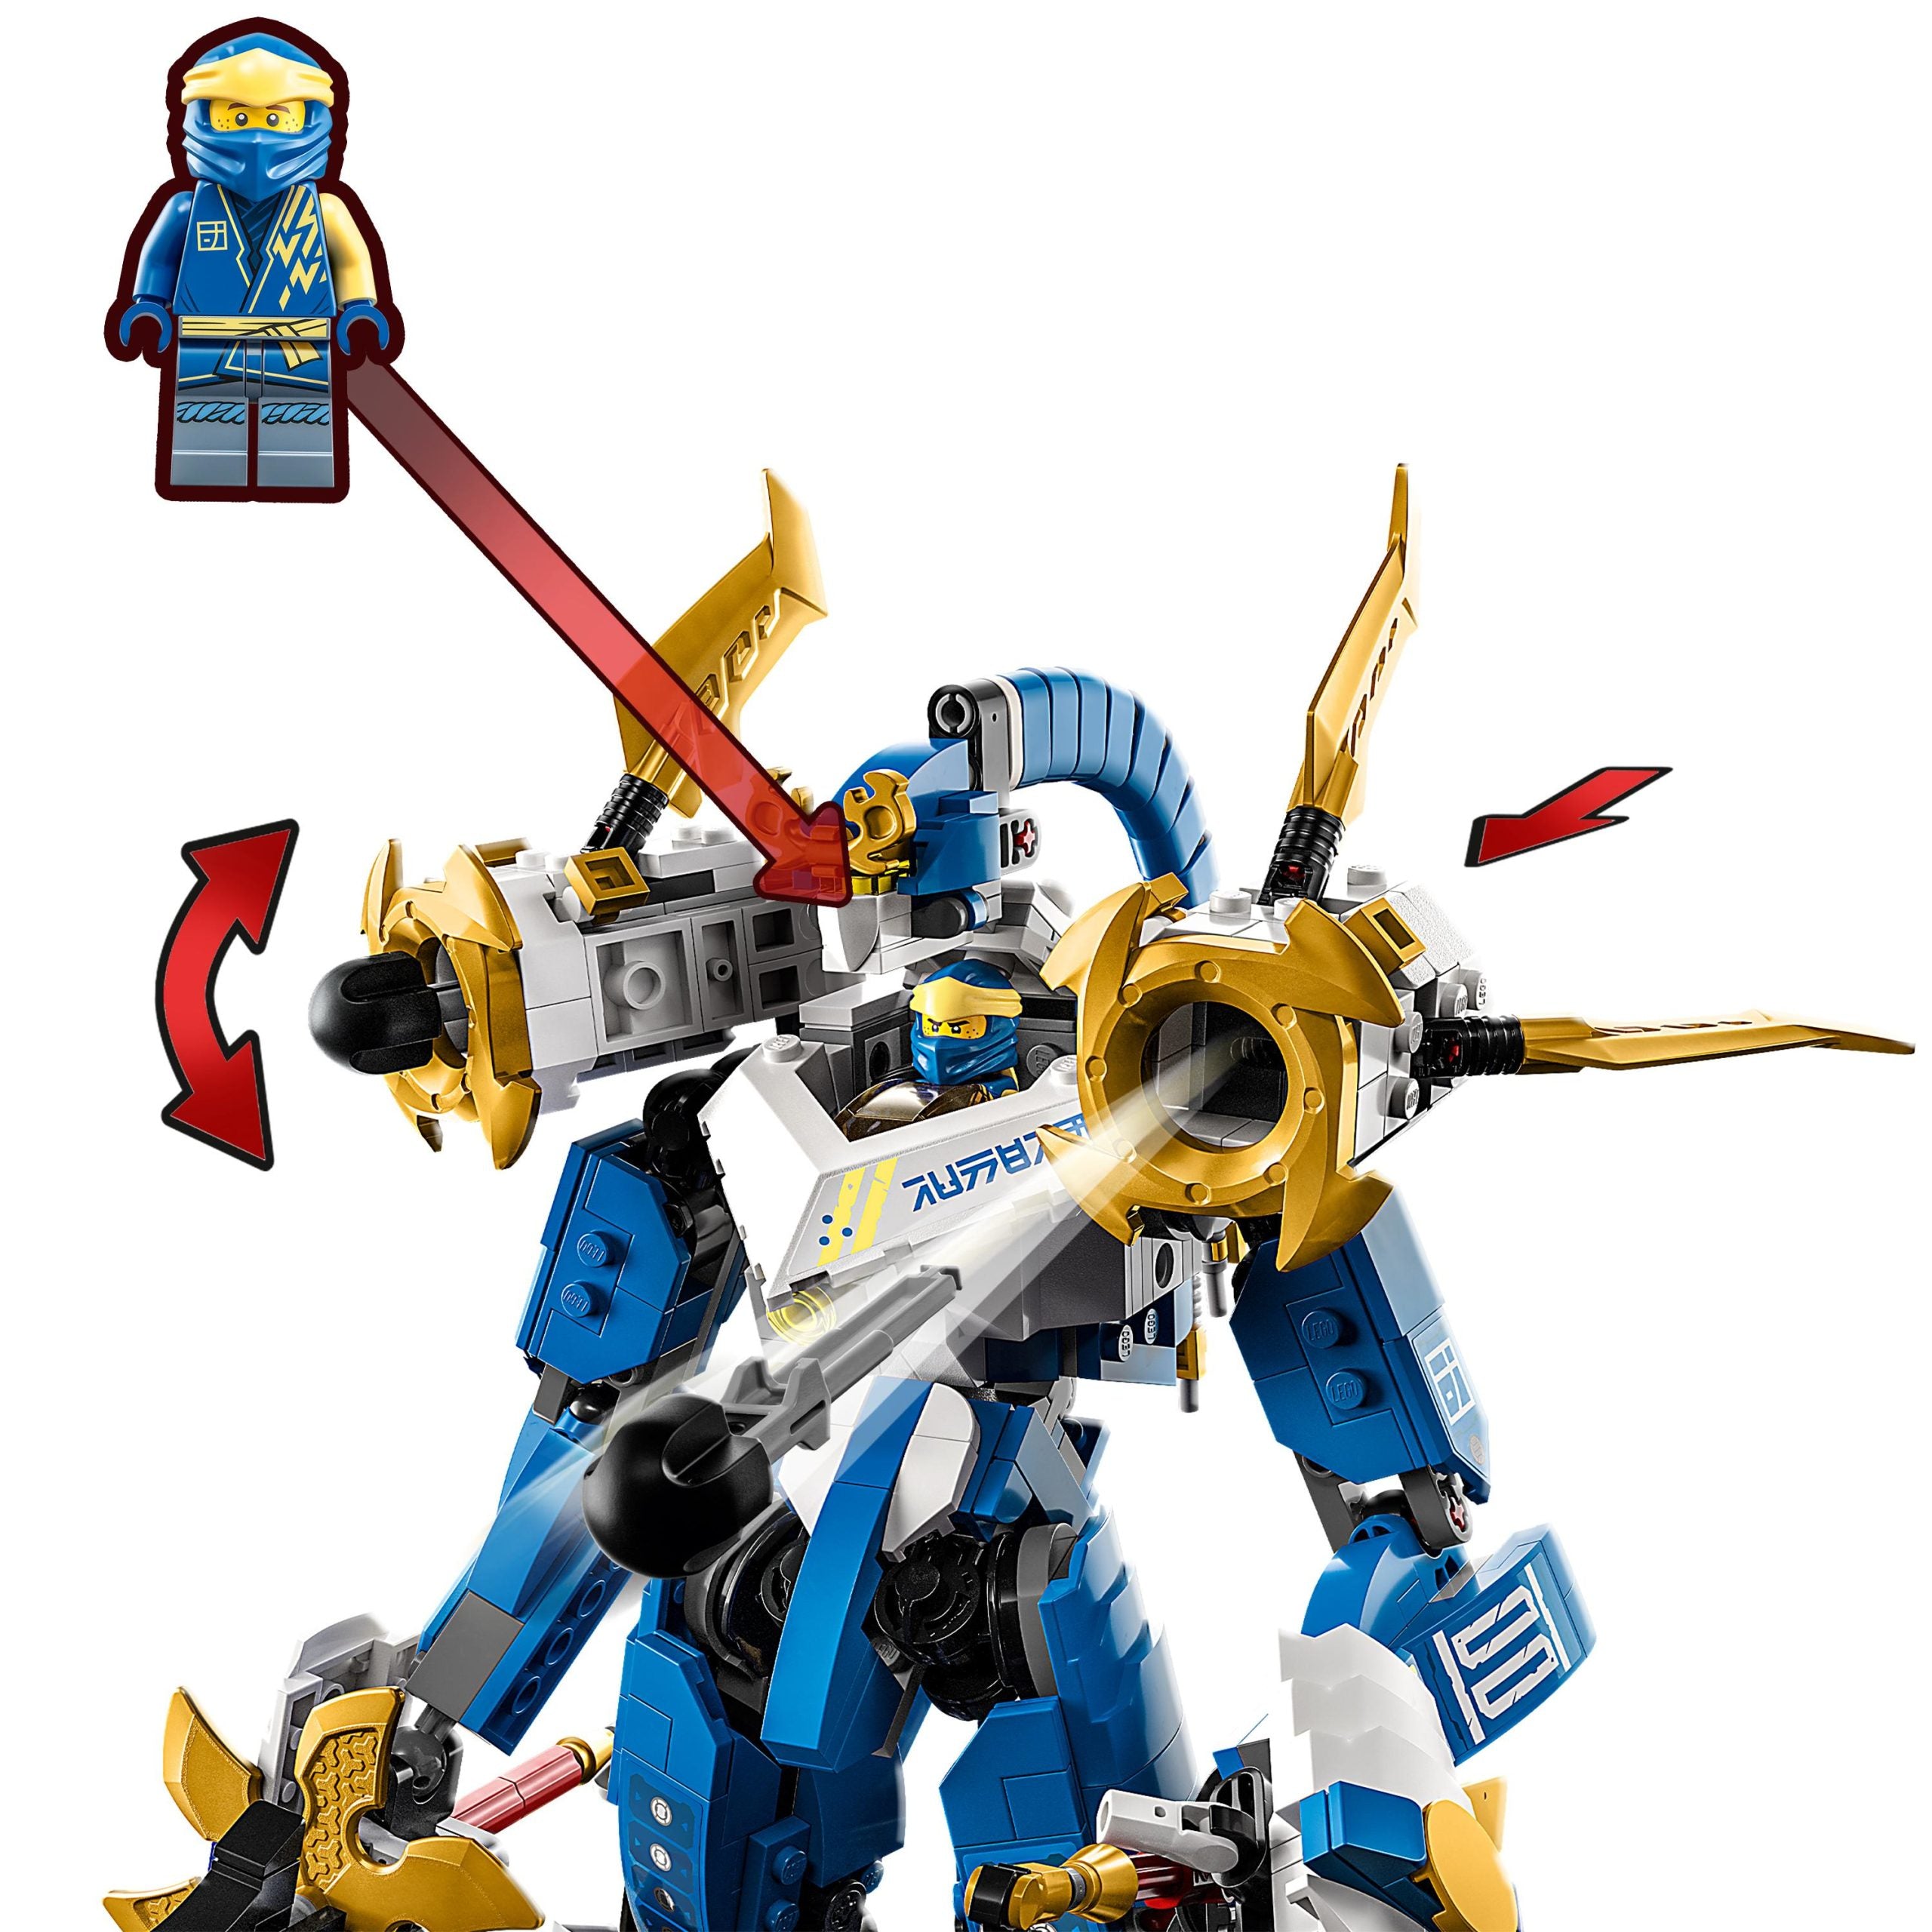 71785 LEGO Ninjago - Mech Titano di Jay -